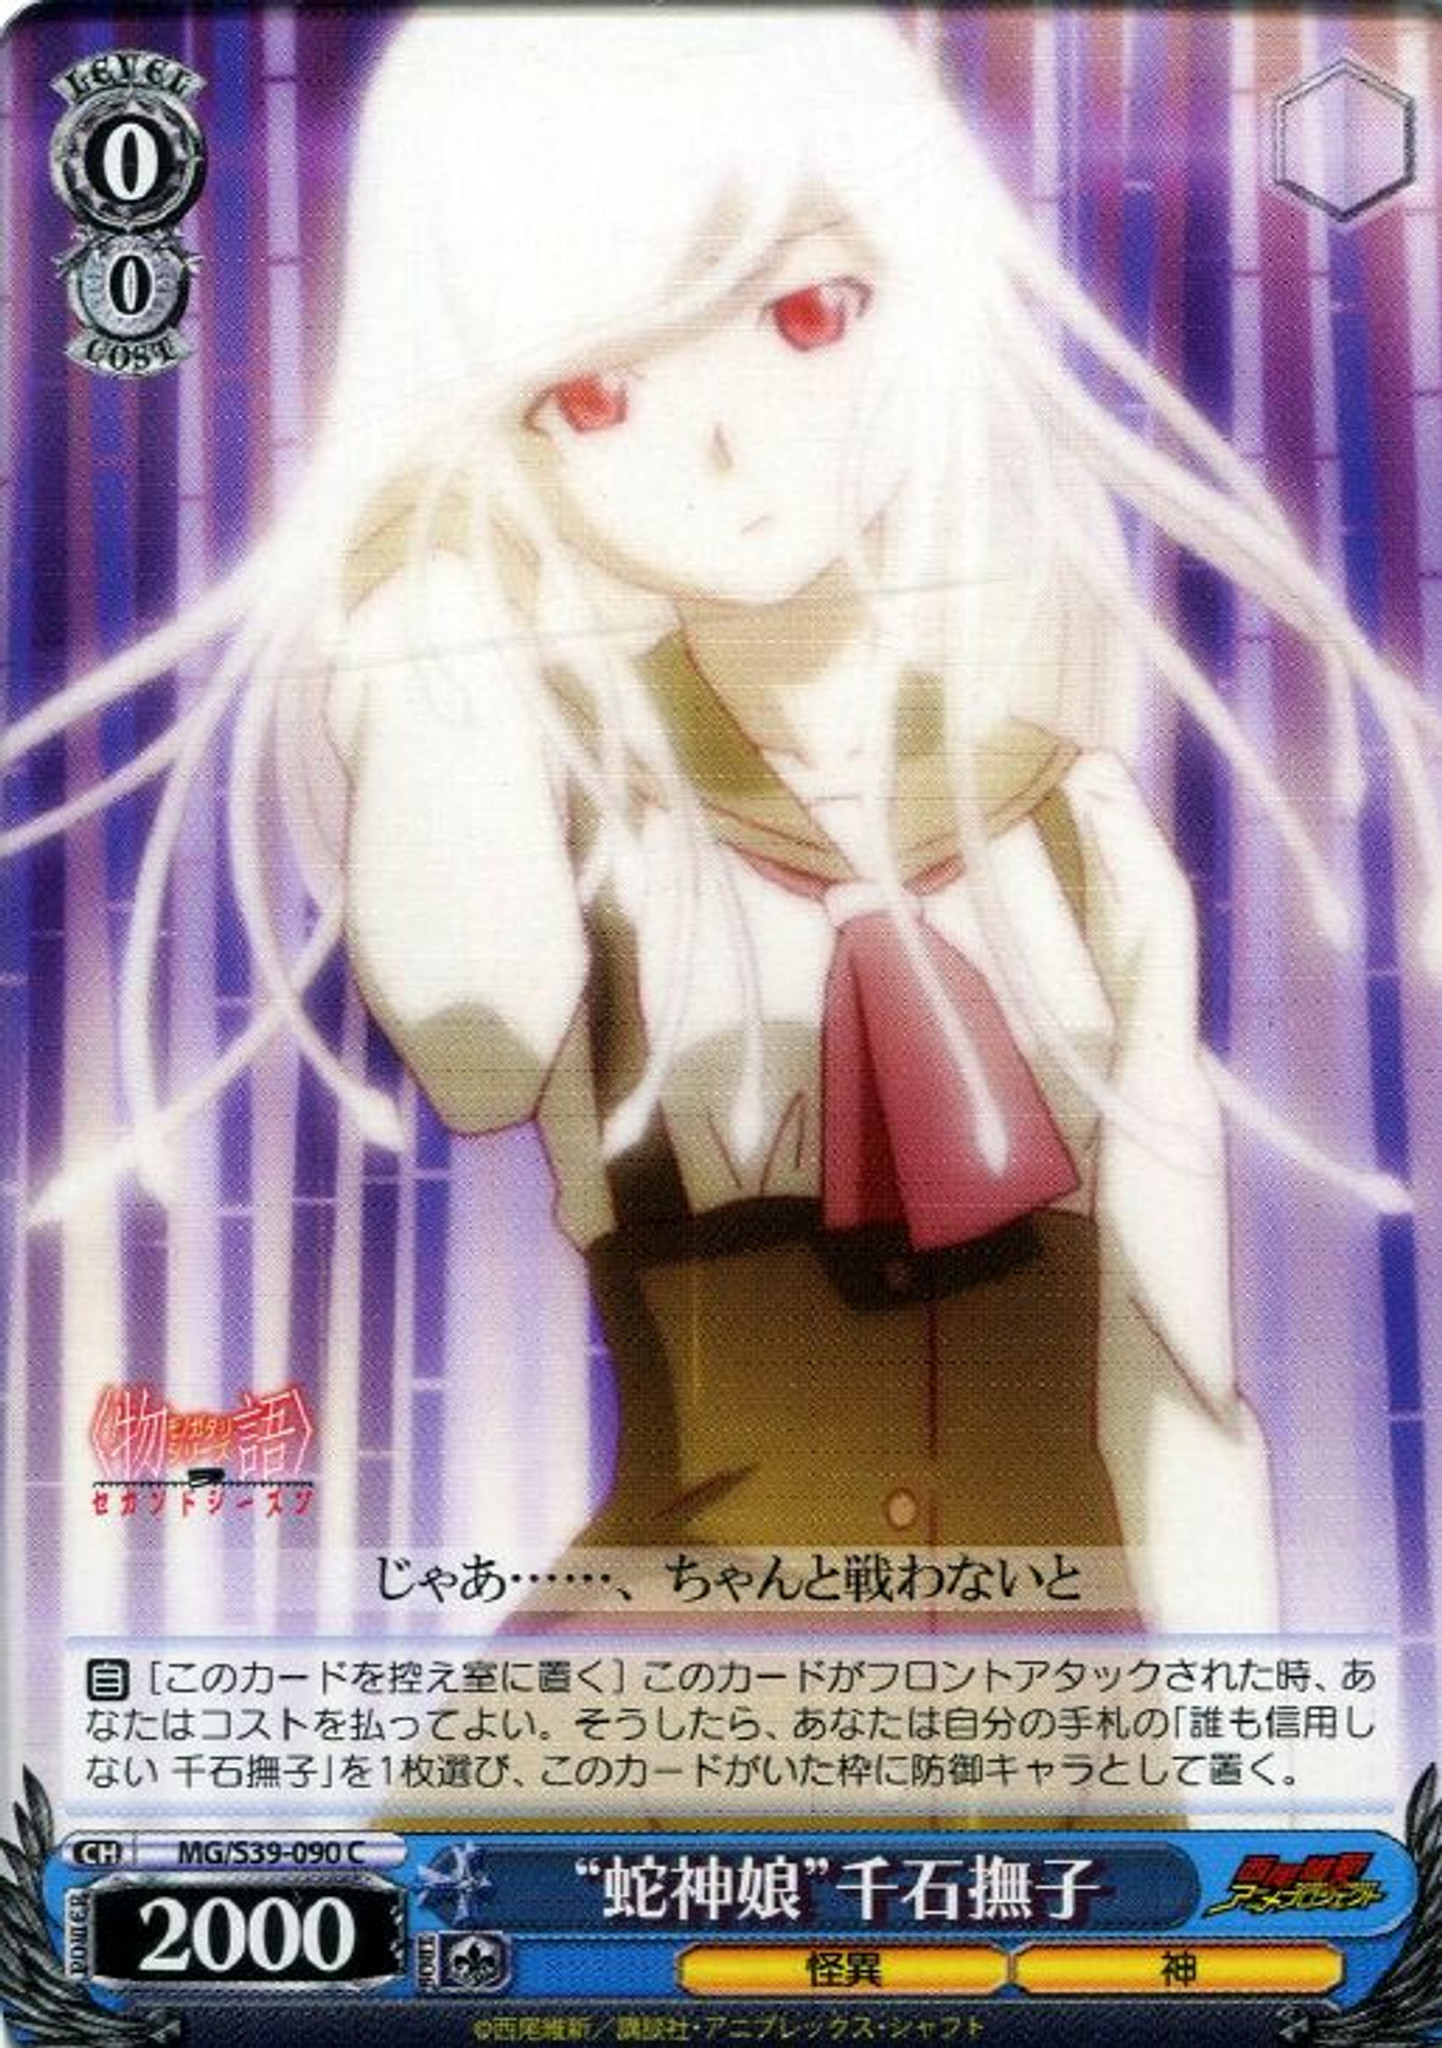 Weiss Schwarz Monogatari Series Second Season Snake Goddess Girl Nadeko Sengoku Mg S39 090